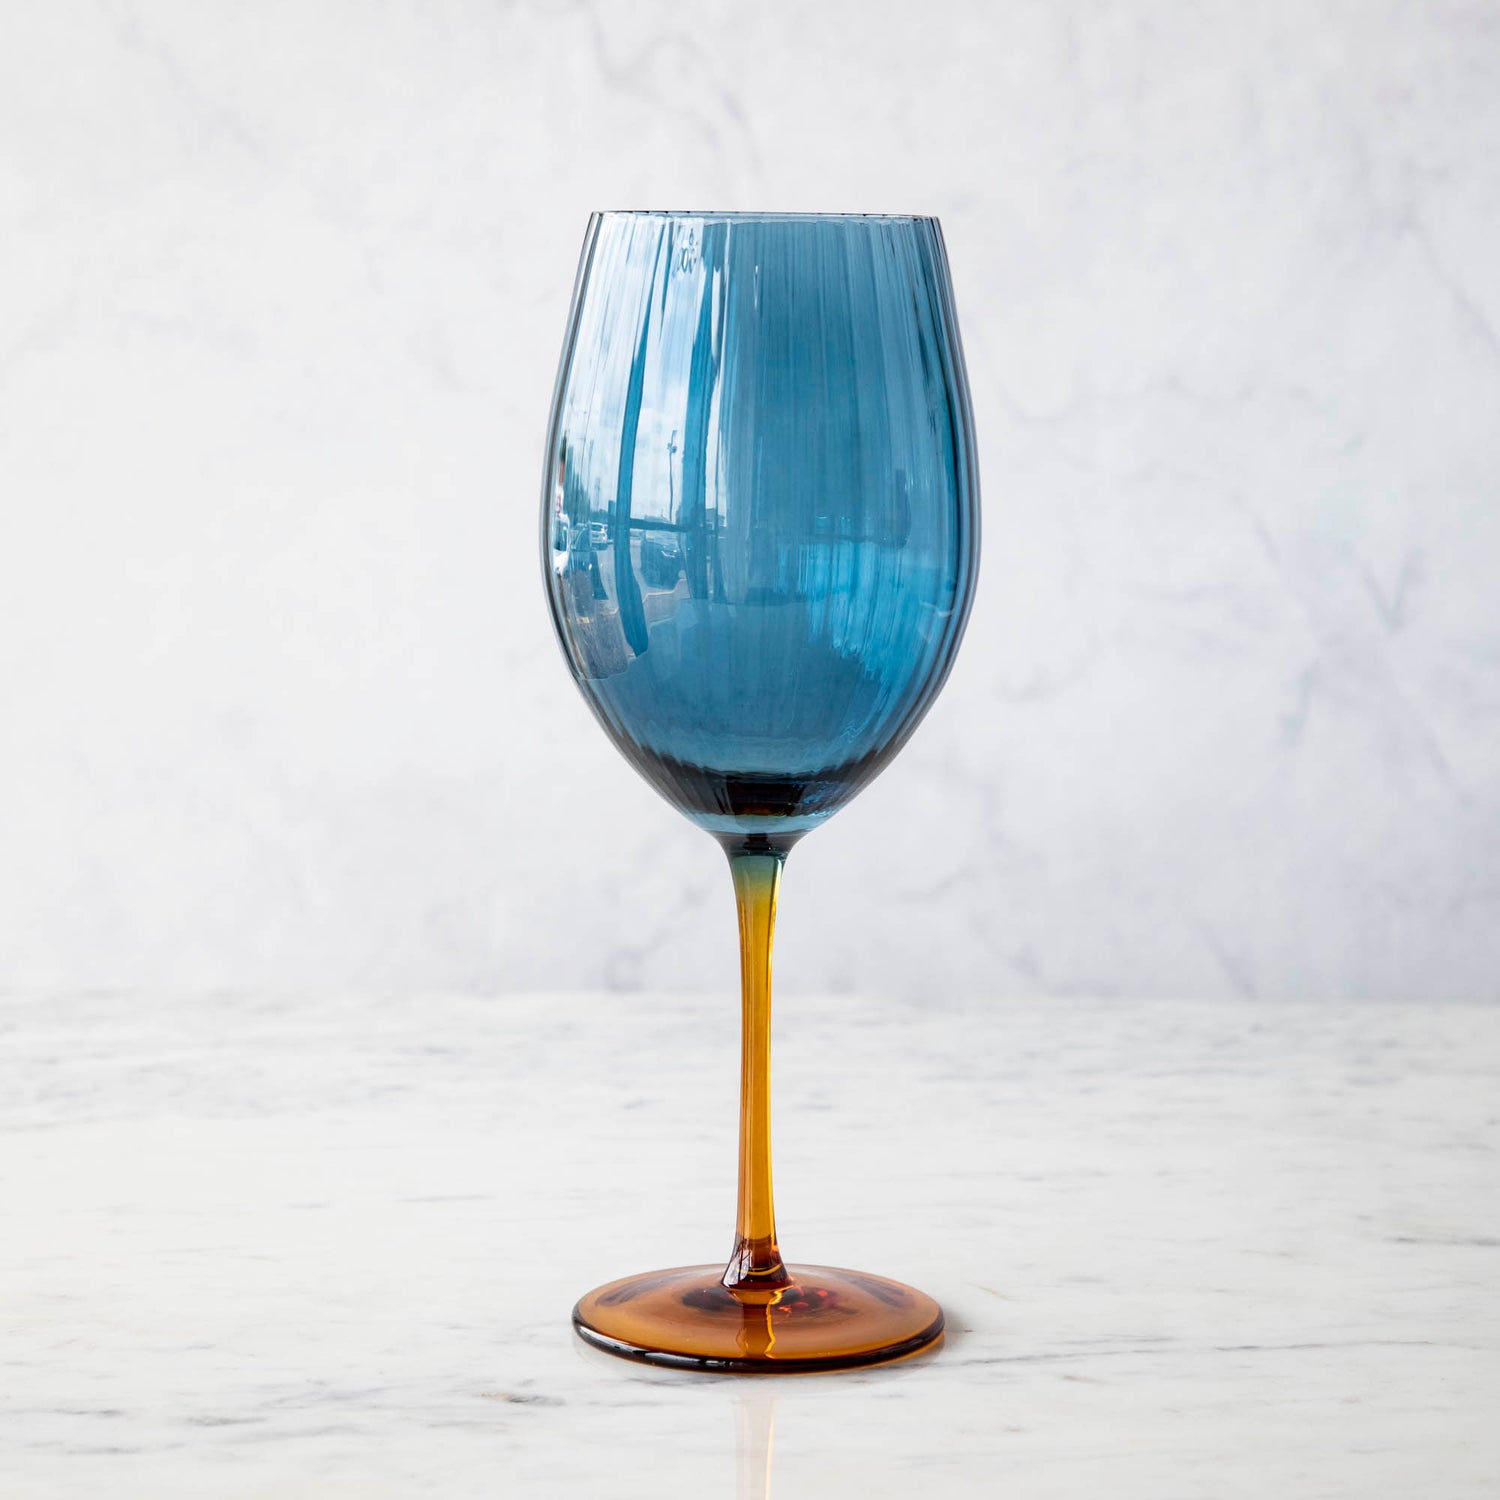 Festive Wine Glass